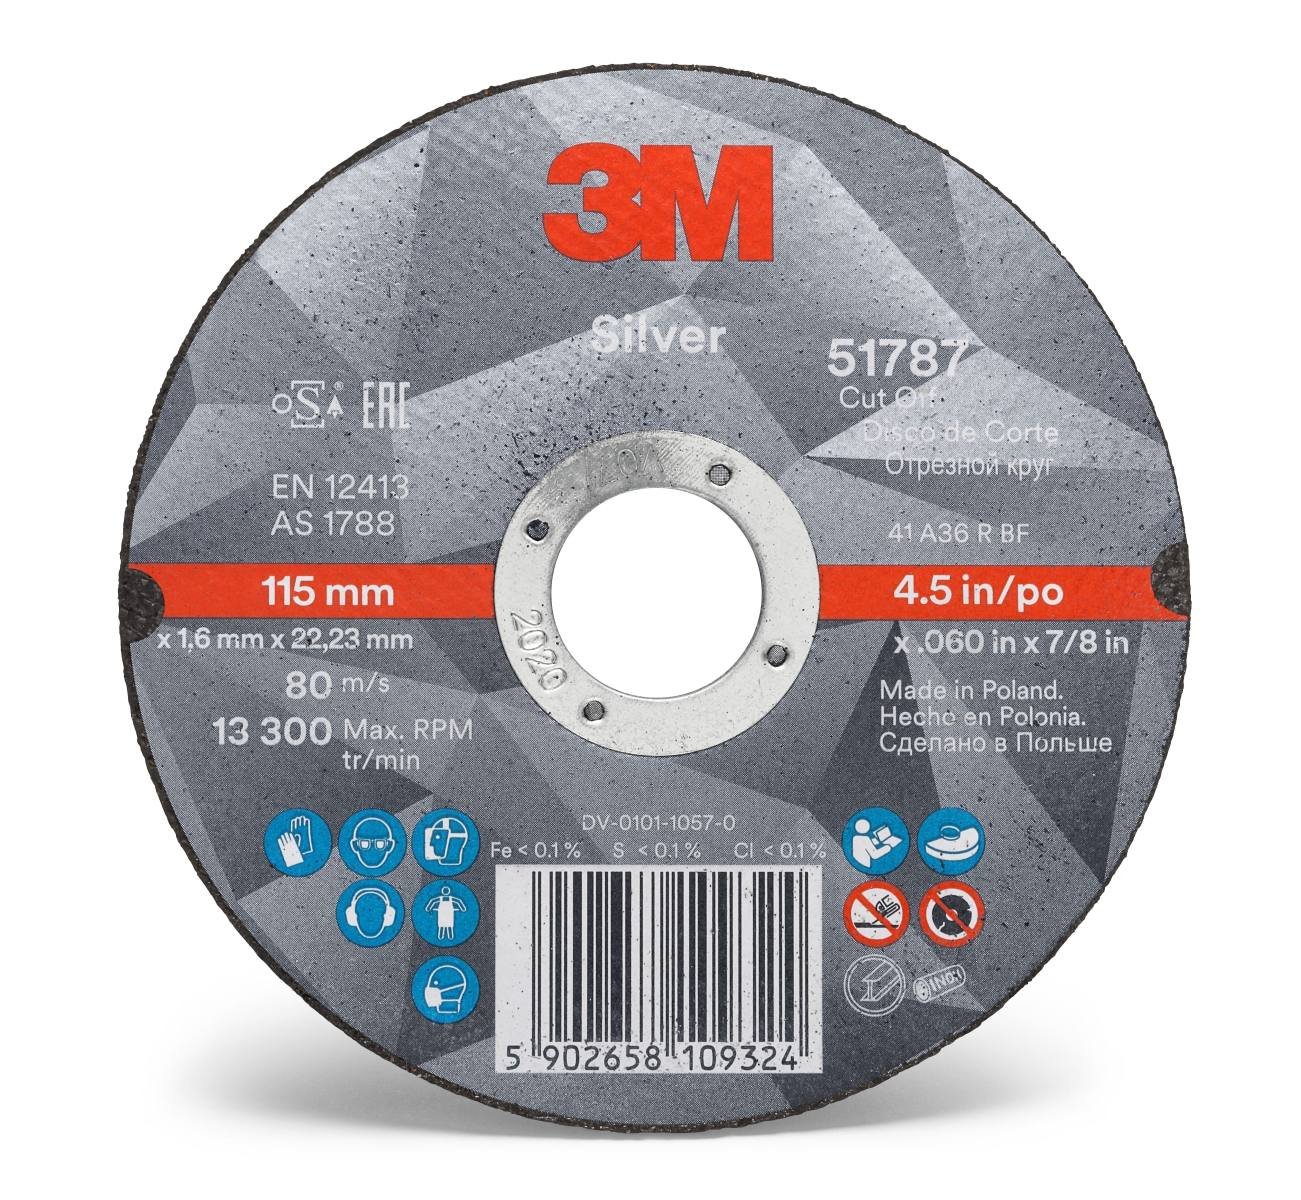 3M Silver Cut-Off Wheel Trennscheibe, 180 mm, 3,0 mm, 22,23 mm, T41, 51803